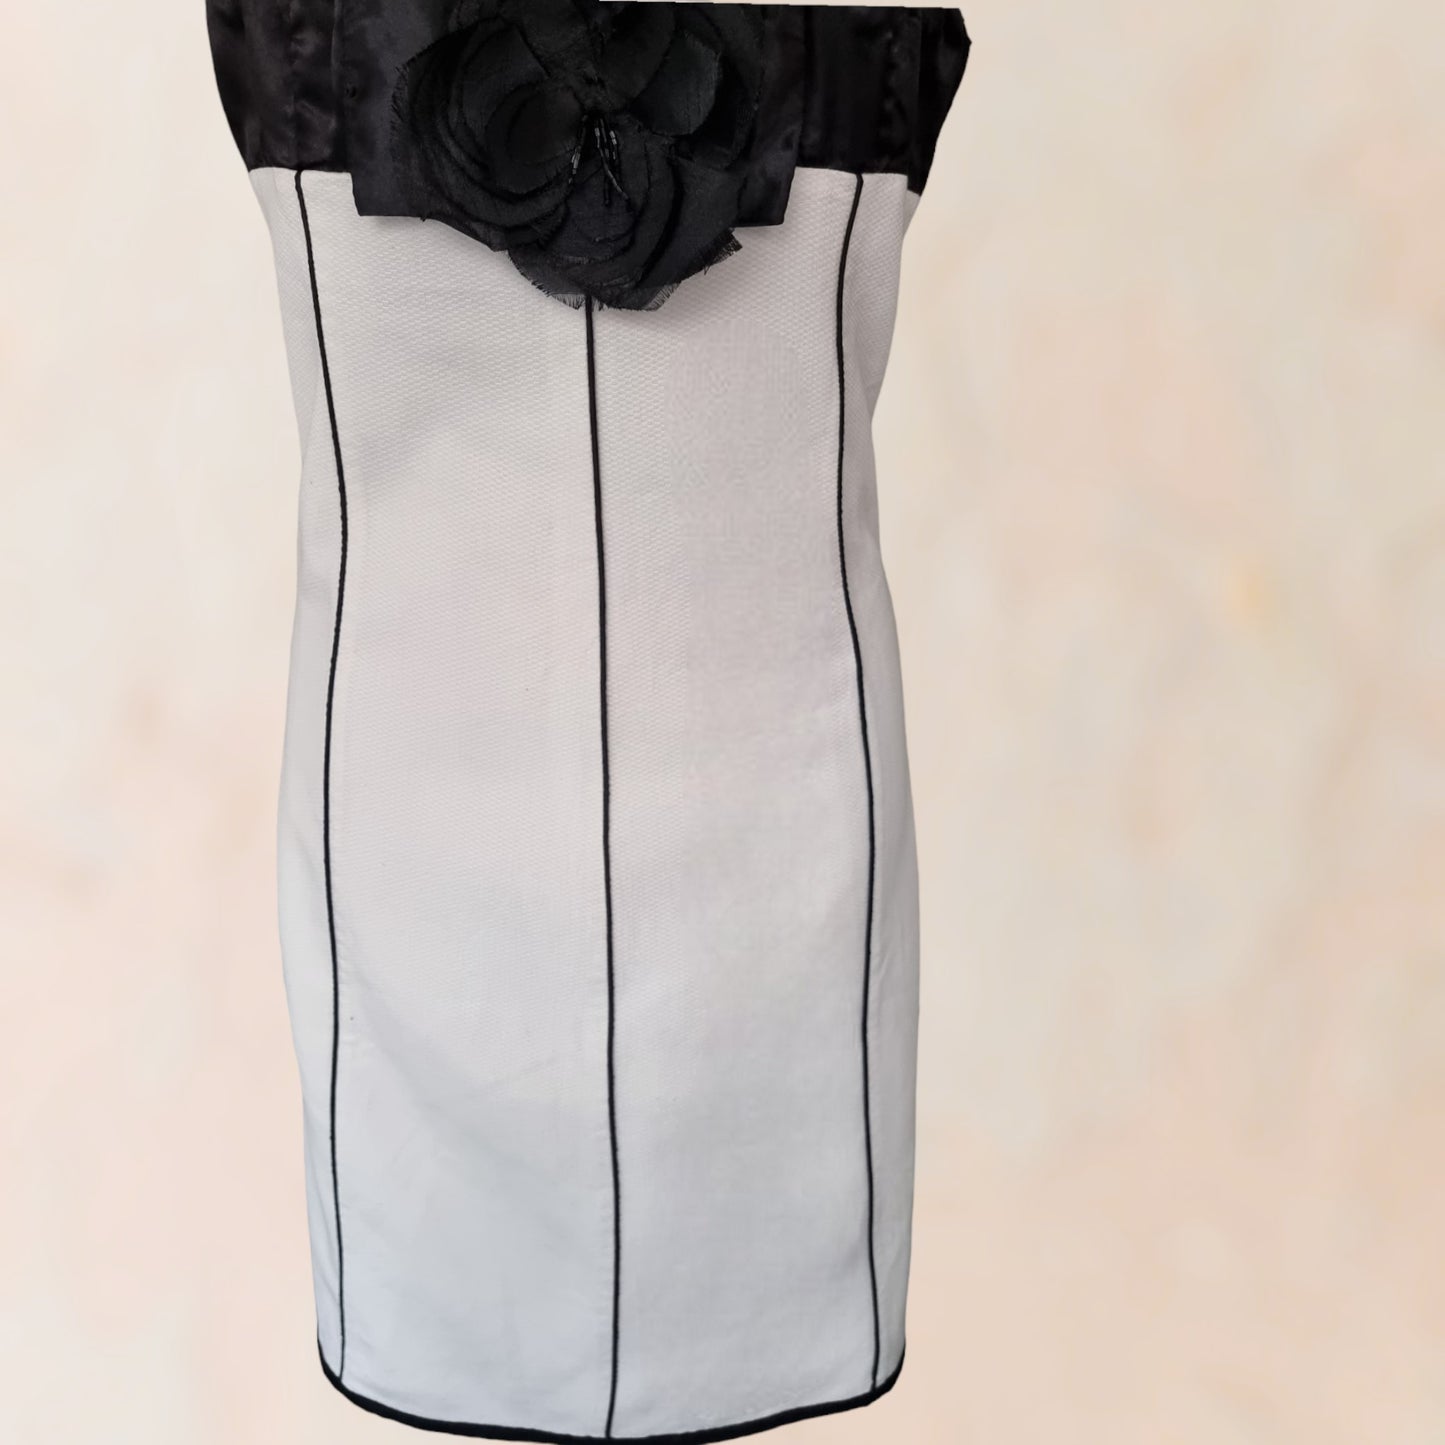 Almatrichi Cream & Black Floral Embellished Dress UK 16 US 12 EU 44 Timeless Fashions